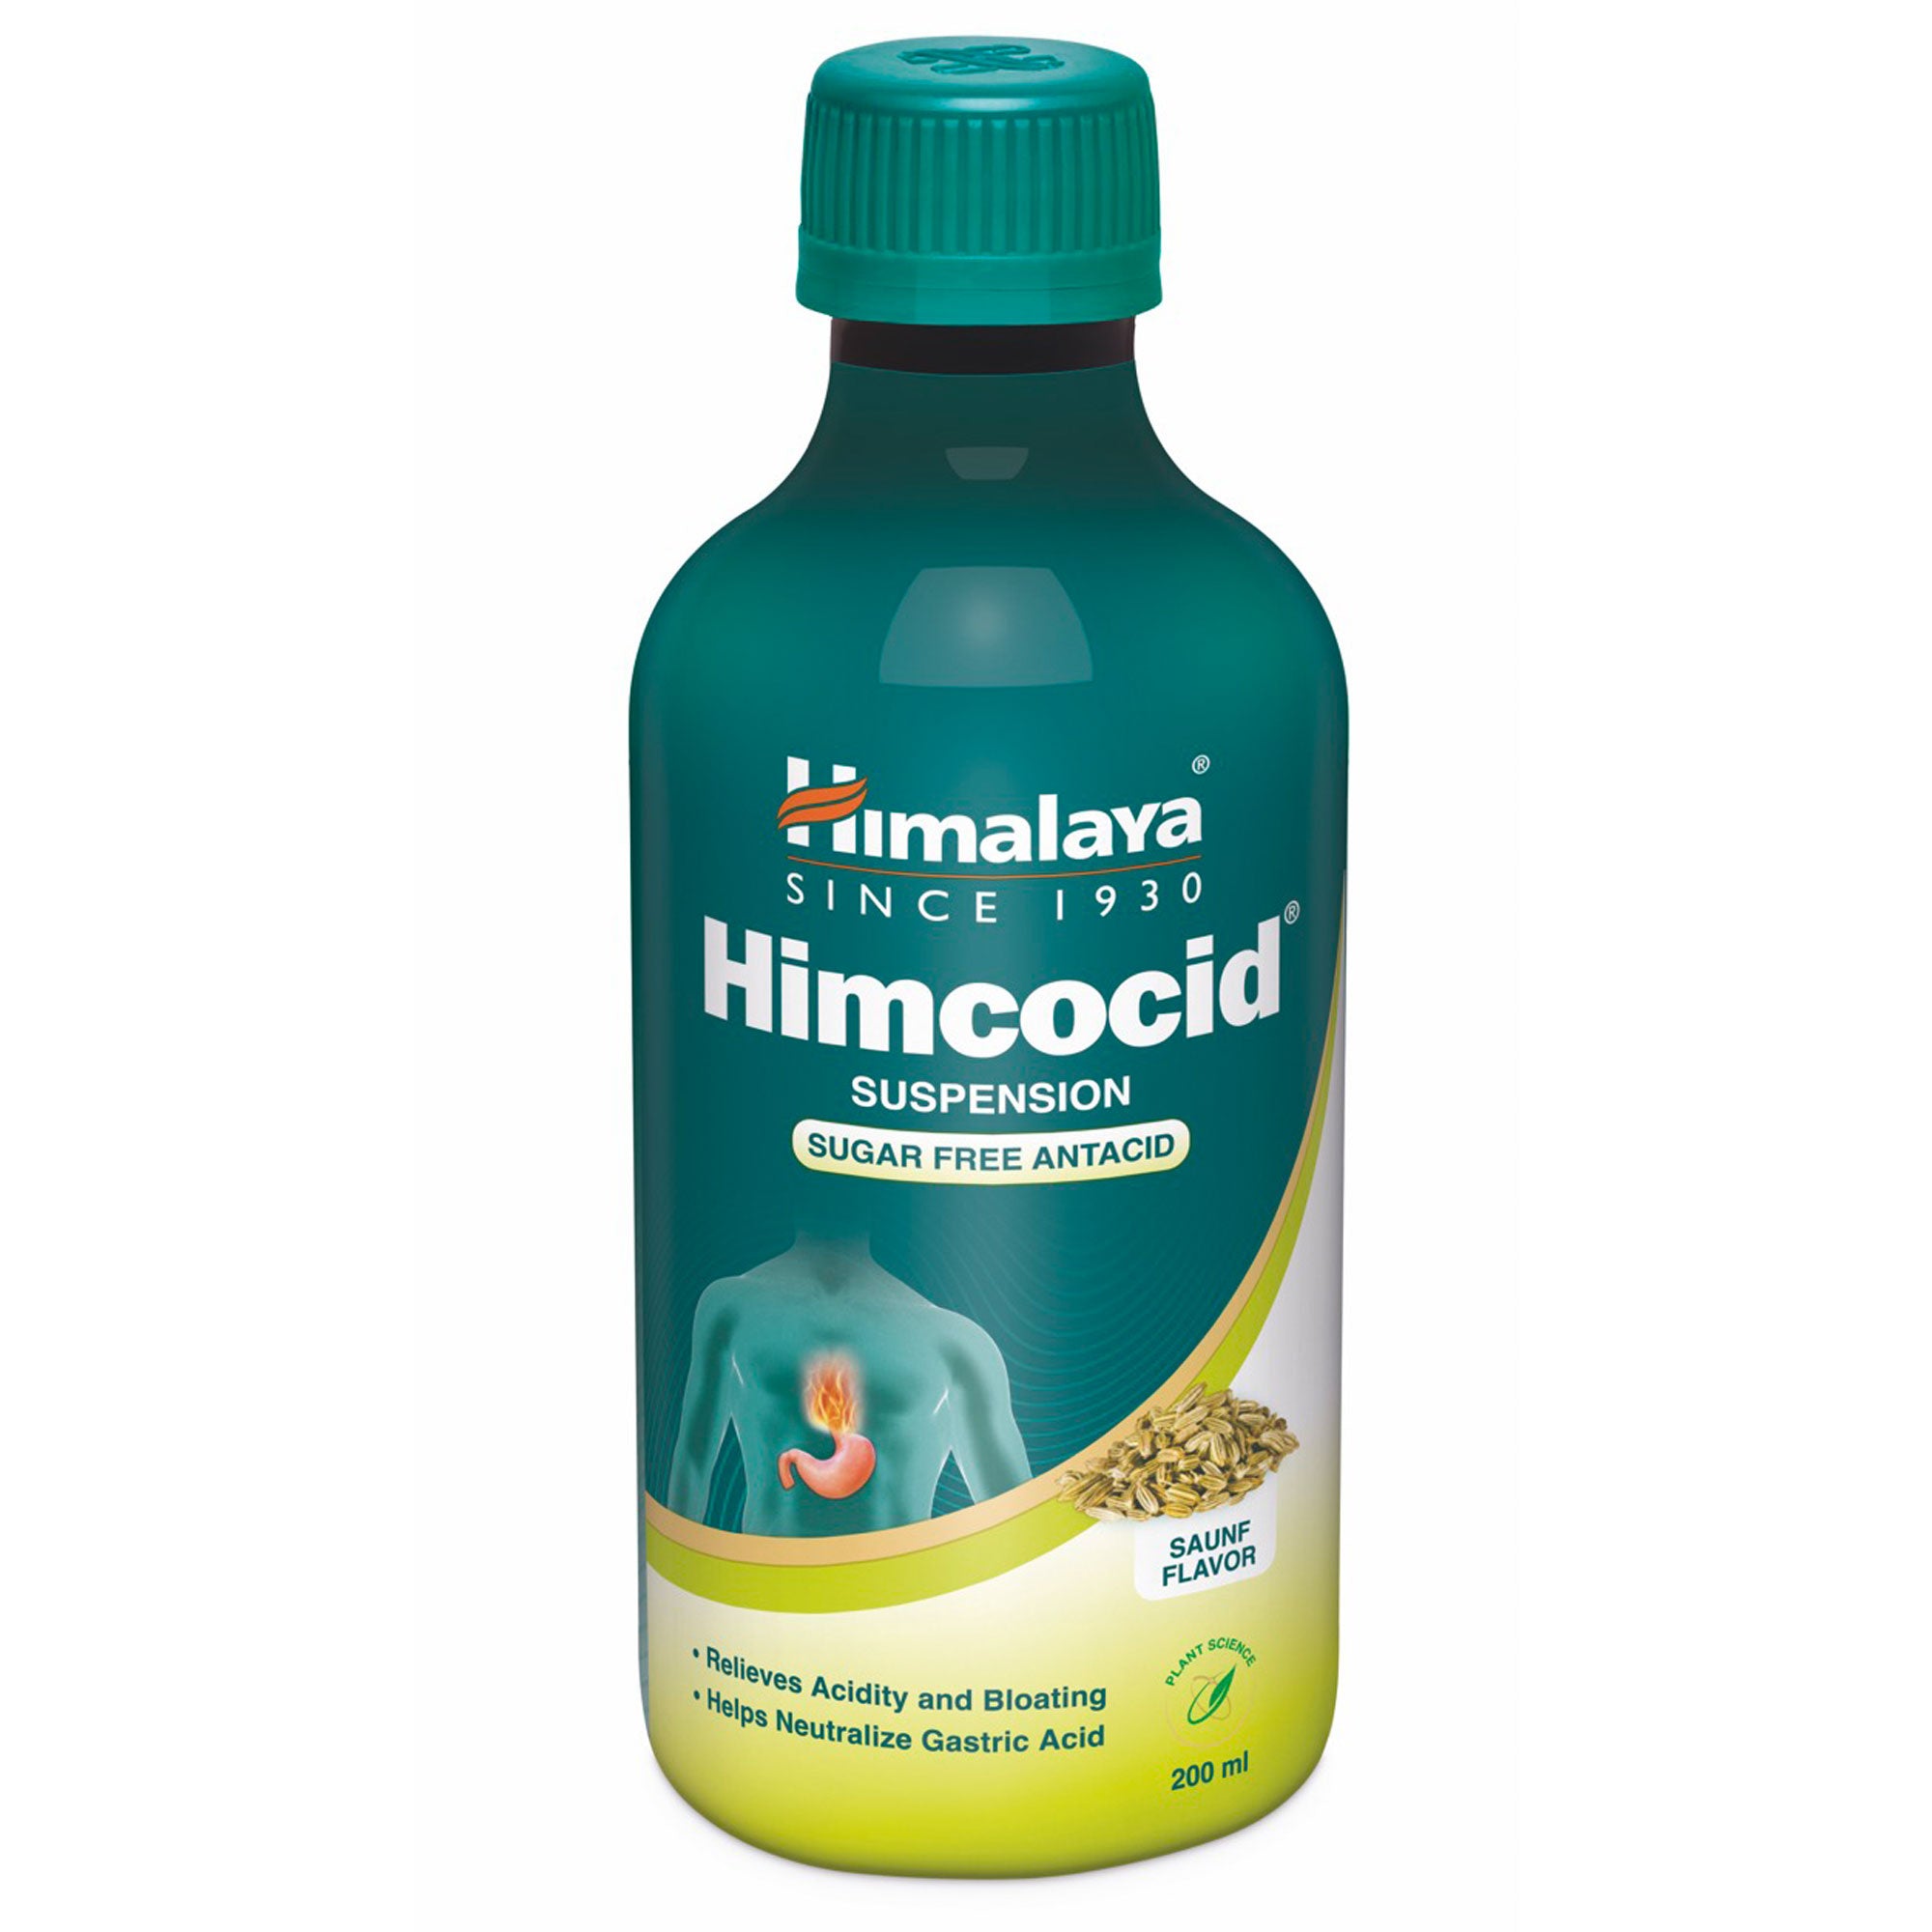 Himcocid-SF